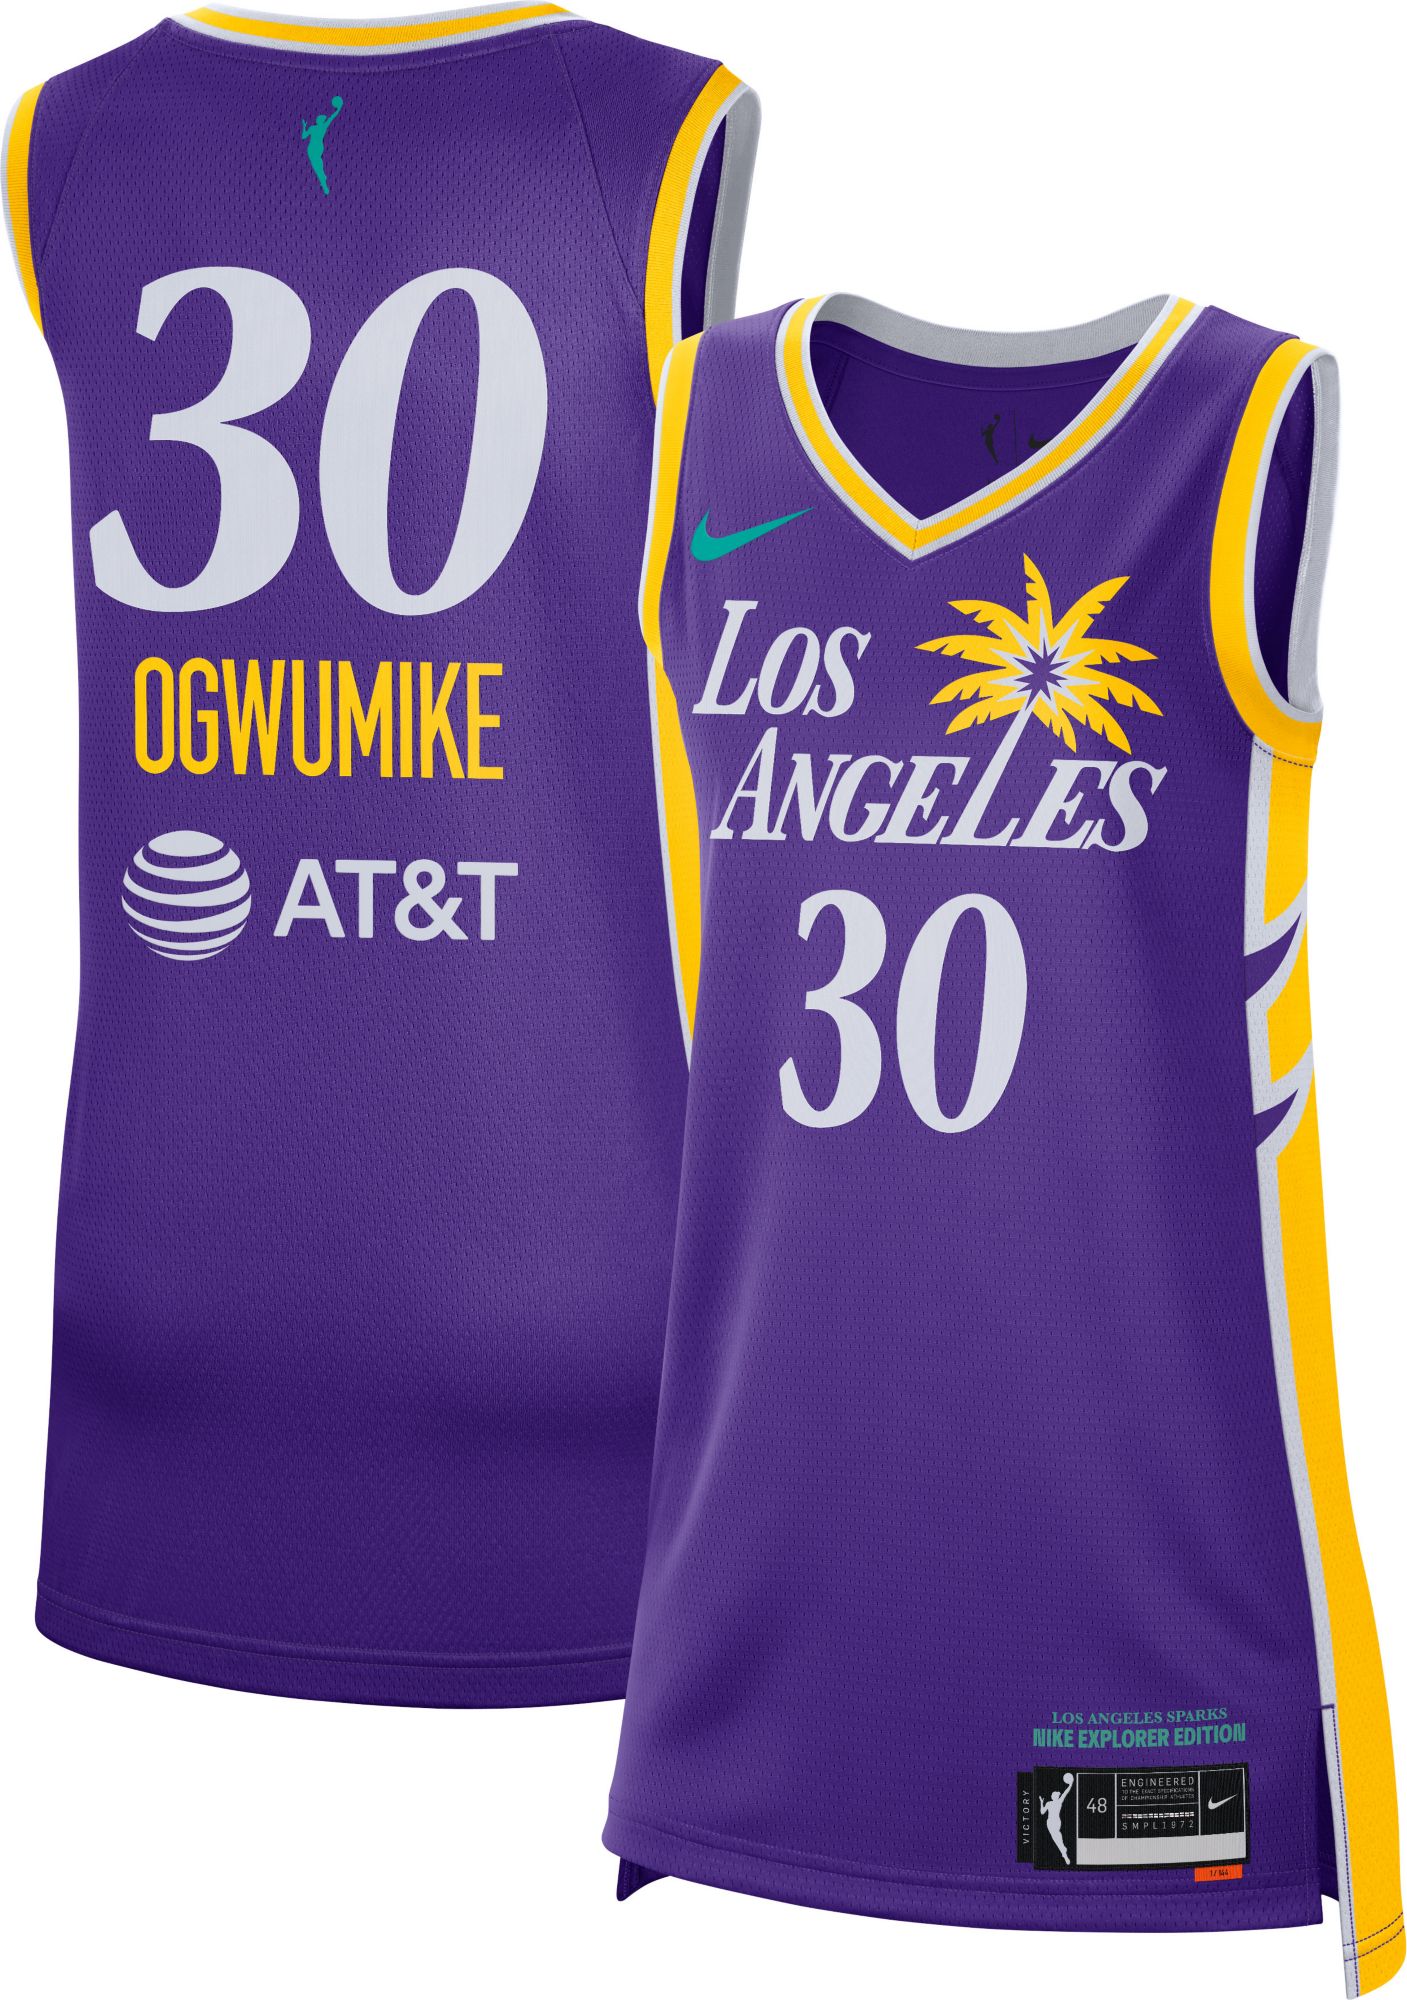 Los Angeles Sparks Nike Purple Practice T-Shirt